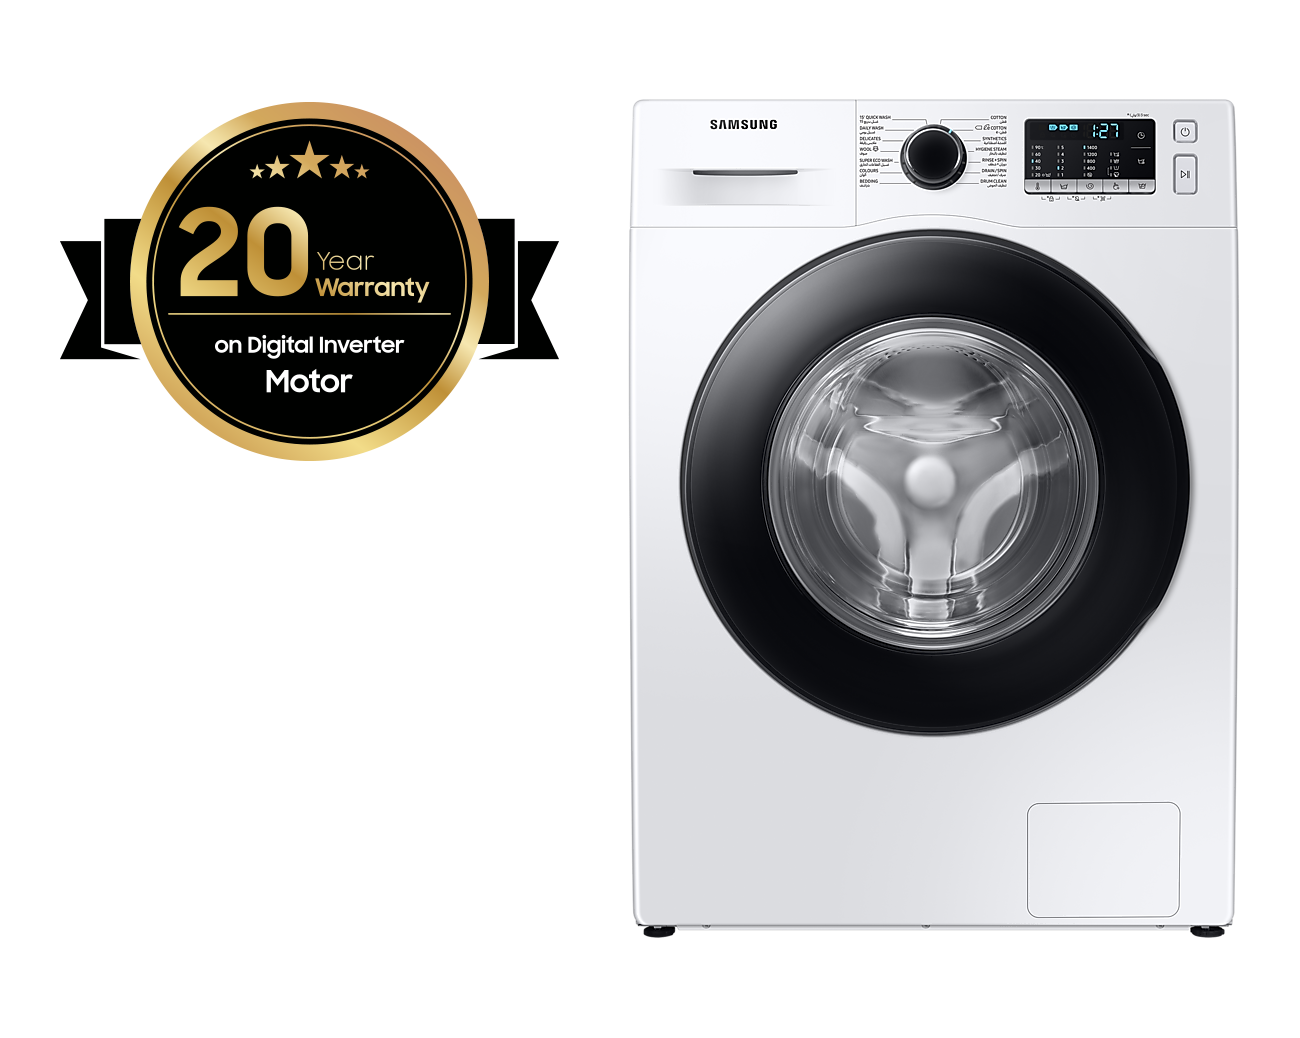 Buy Washing Machines in UAE - Washer Dryers & More